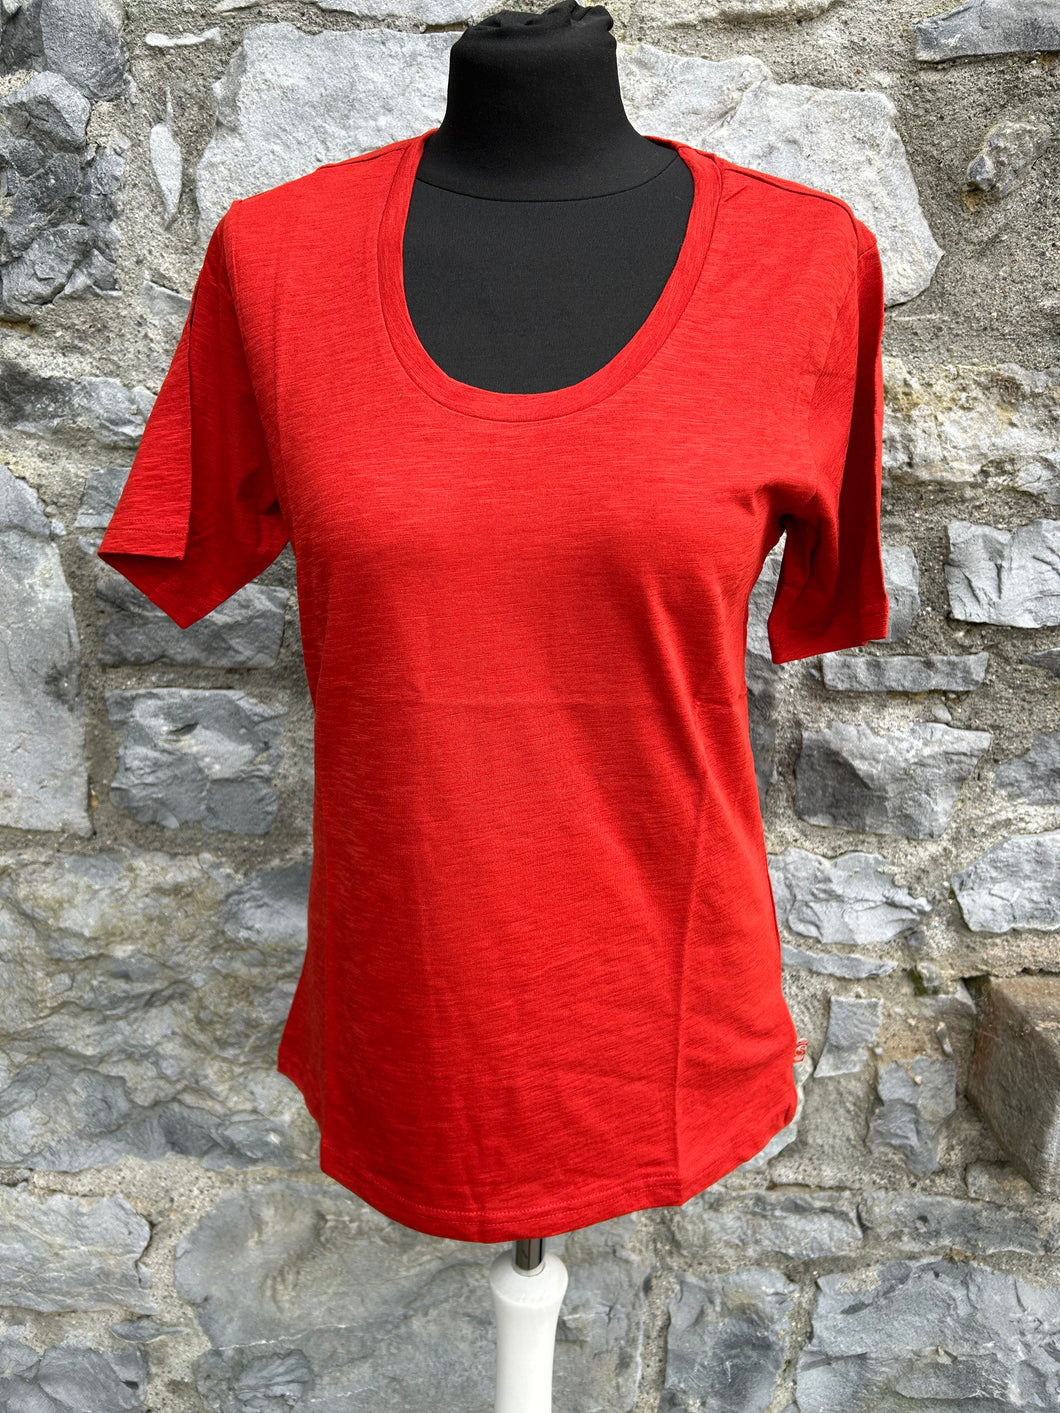 Red T-shirt uk 12